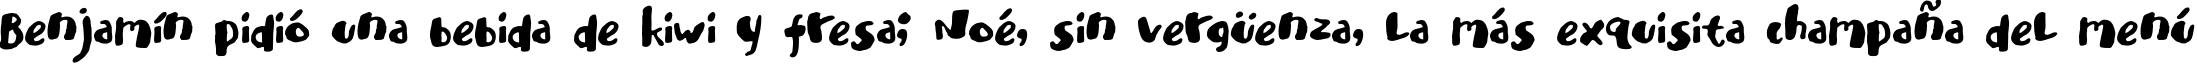 Пример написания шрифтом Ladybug текста на испанском